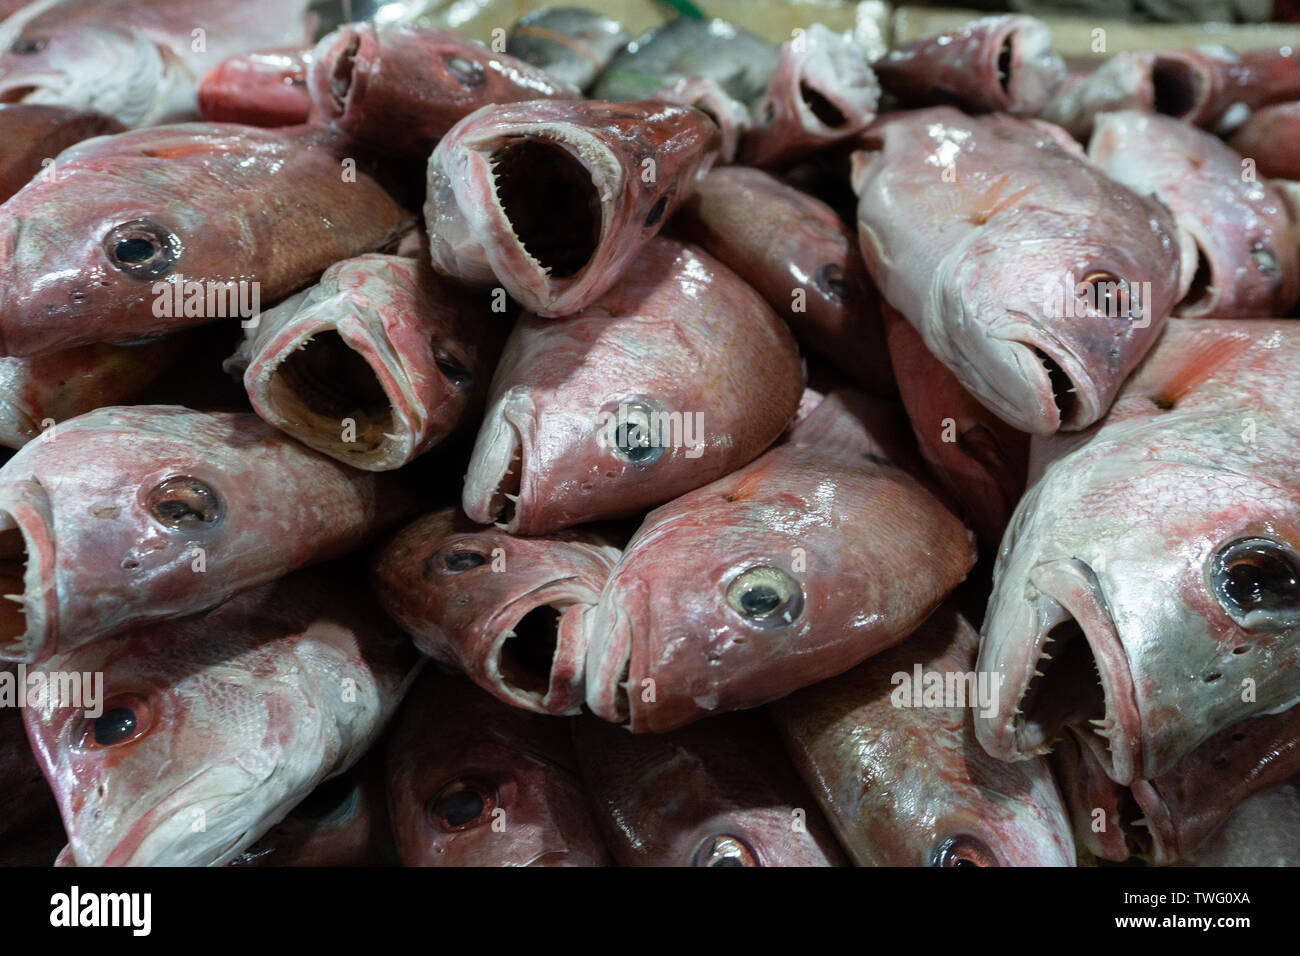 Bunch of fresh raw red on ice at Kedonganan fish market, Bali - Alamy